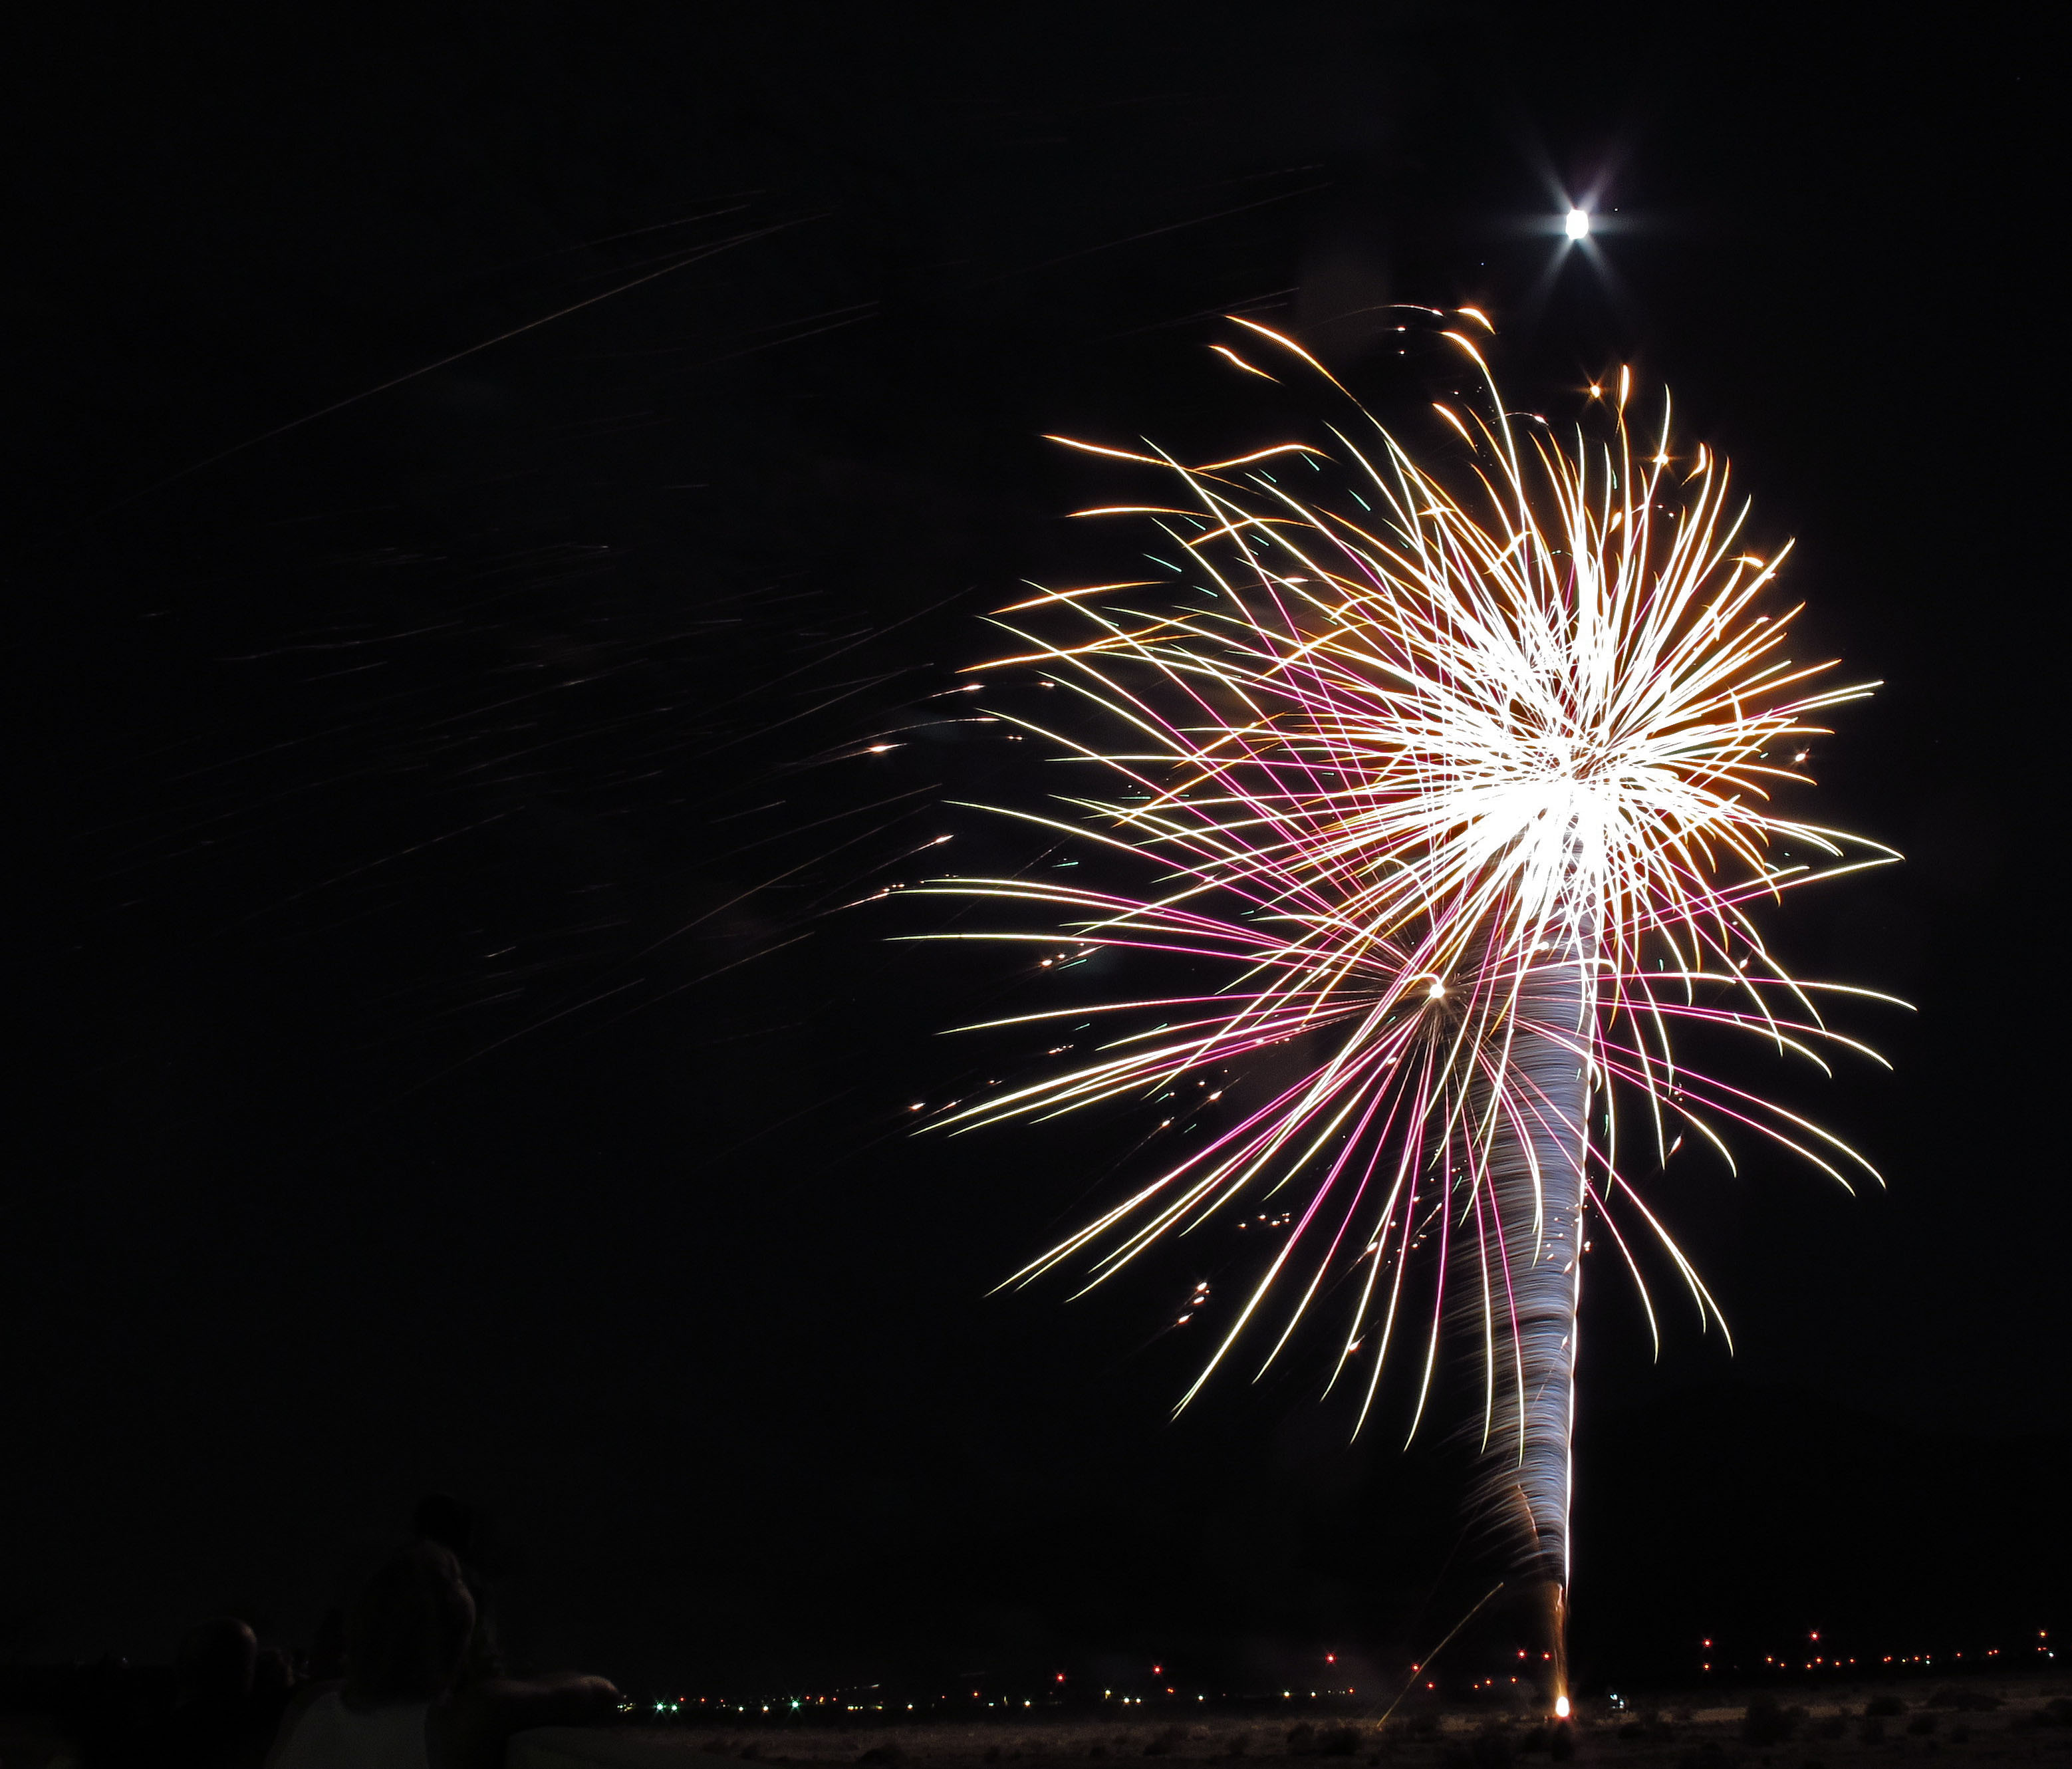 DHS Fireworks July 5 (0073)